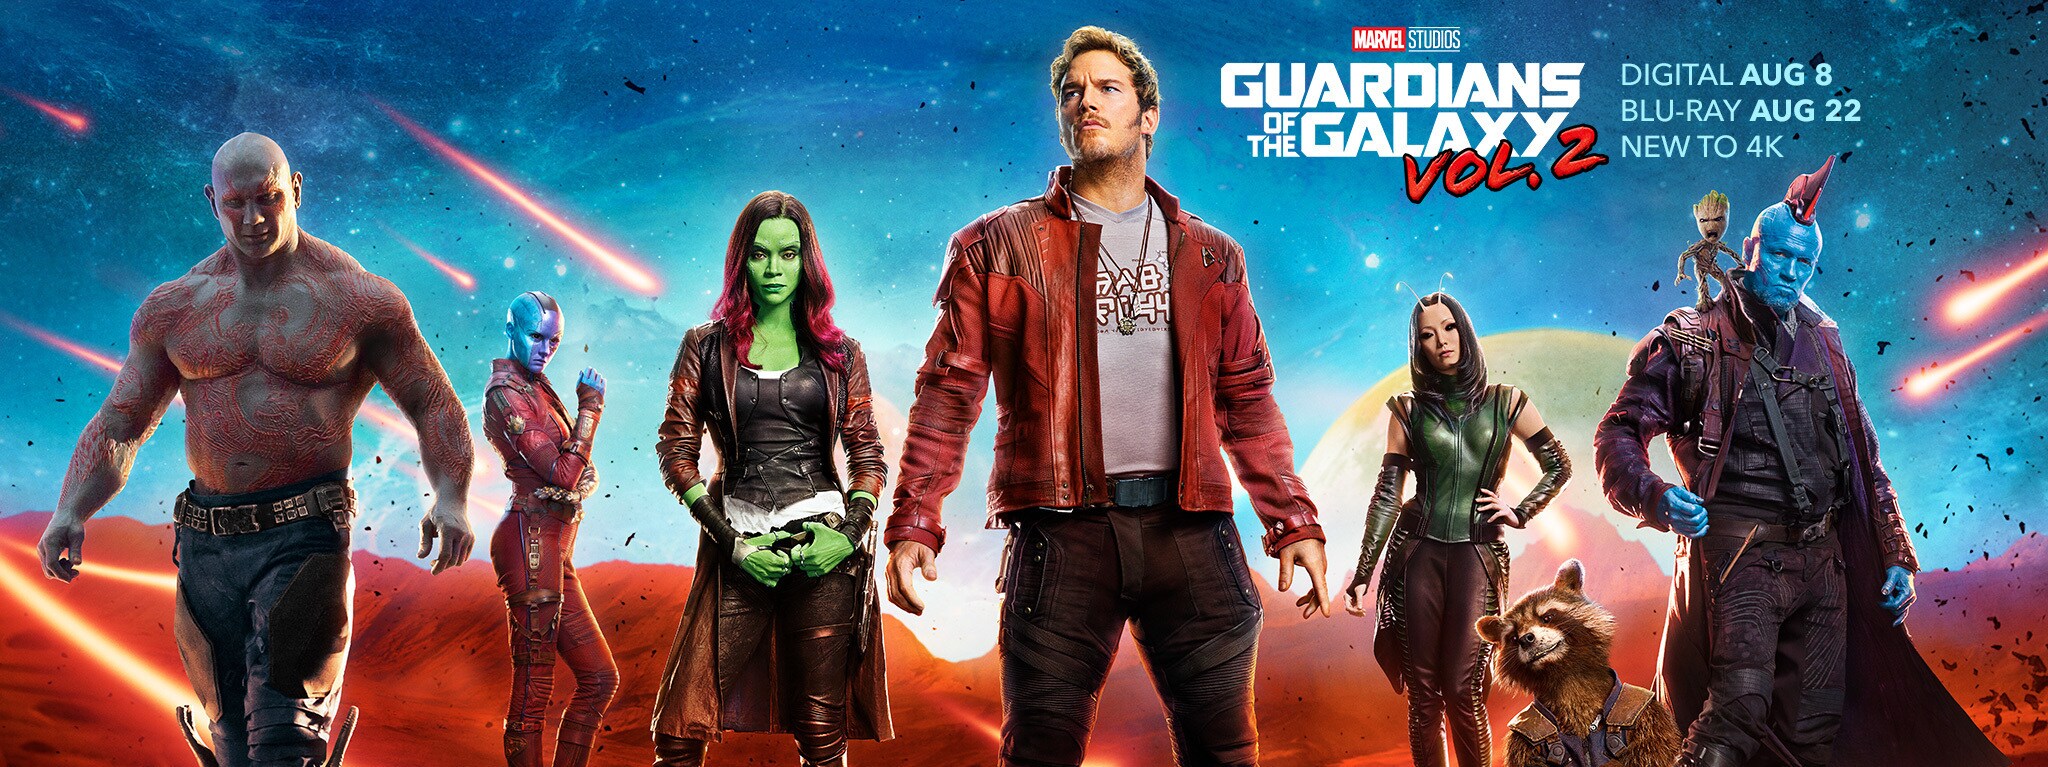 Guardians of the Galaxy Vol. 2  Disney Movies